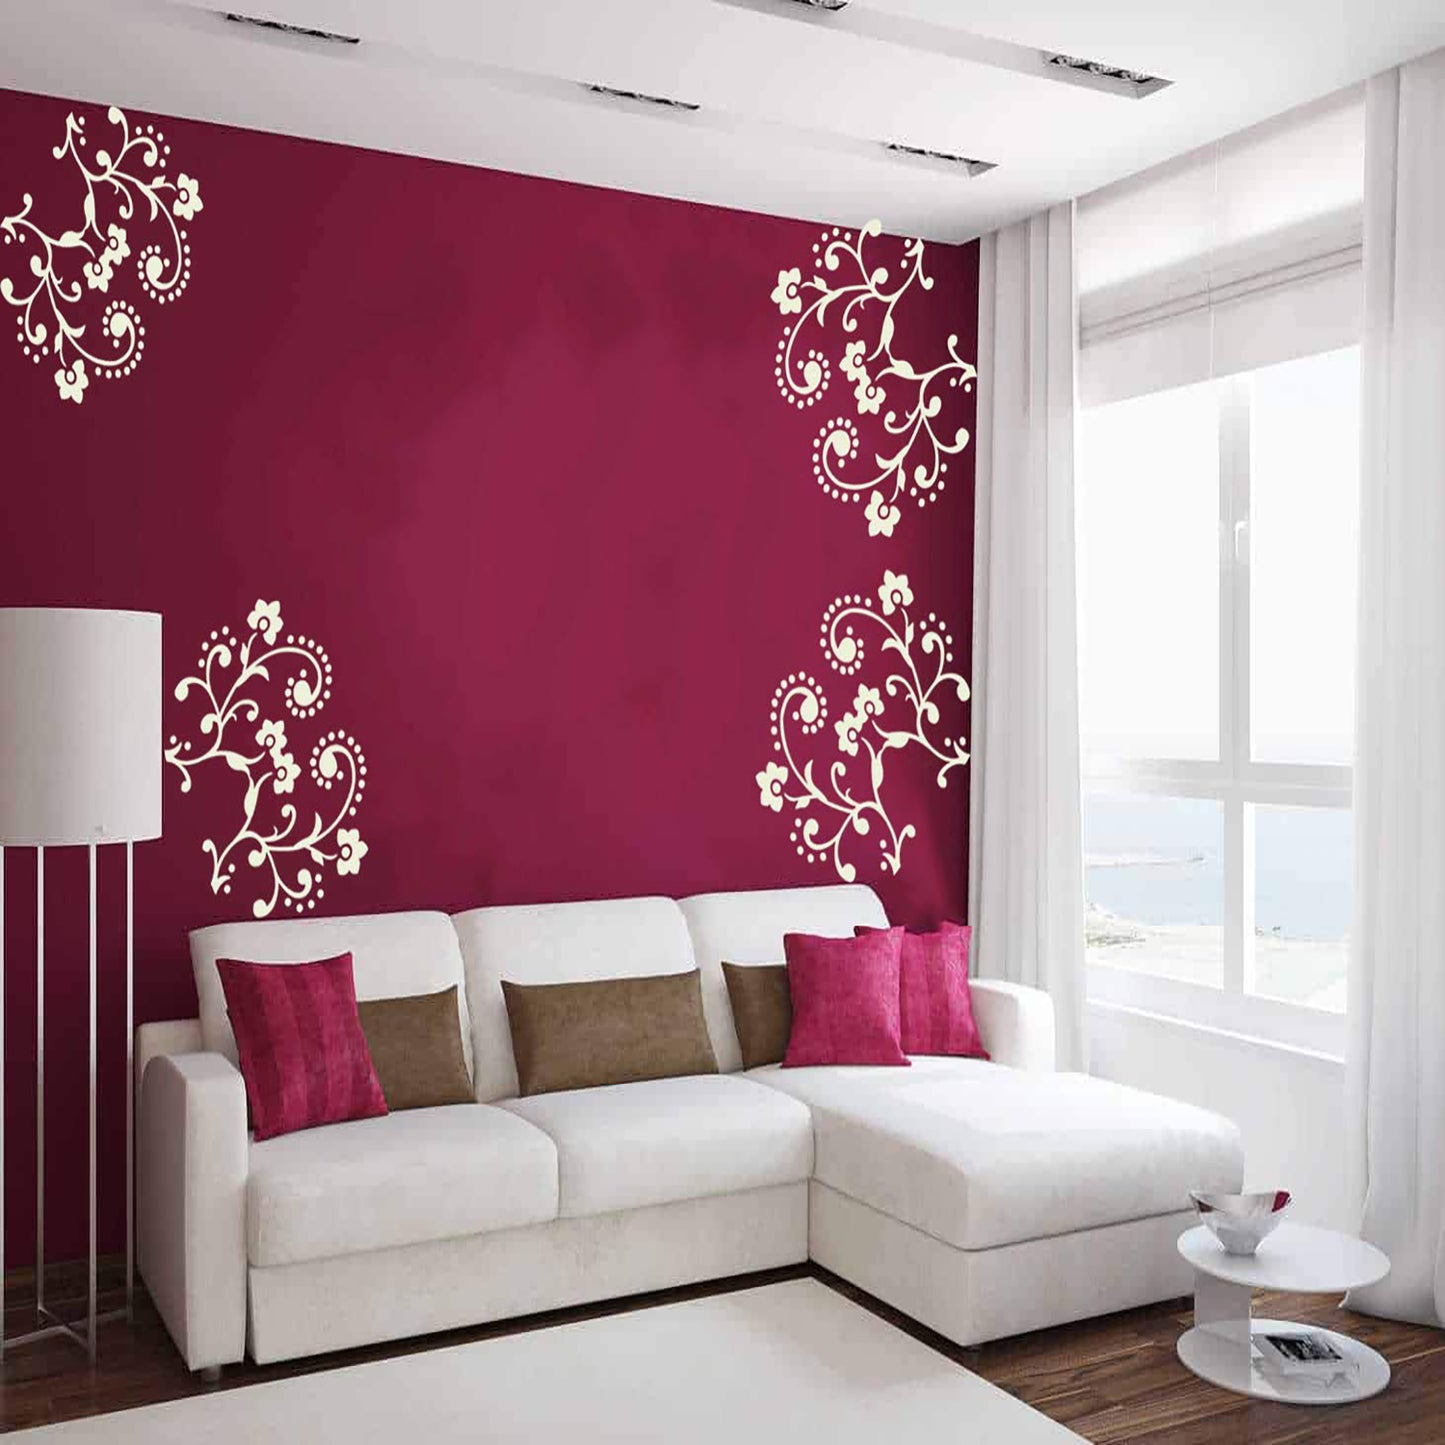 Swirl Floral Wall Design Stencil (KHSNT167)